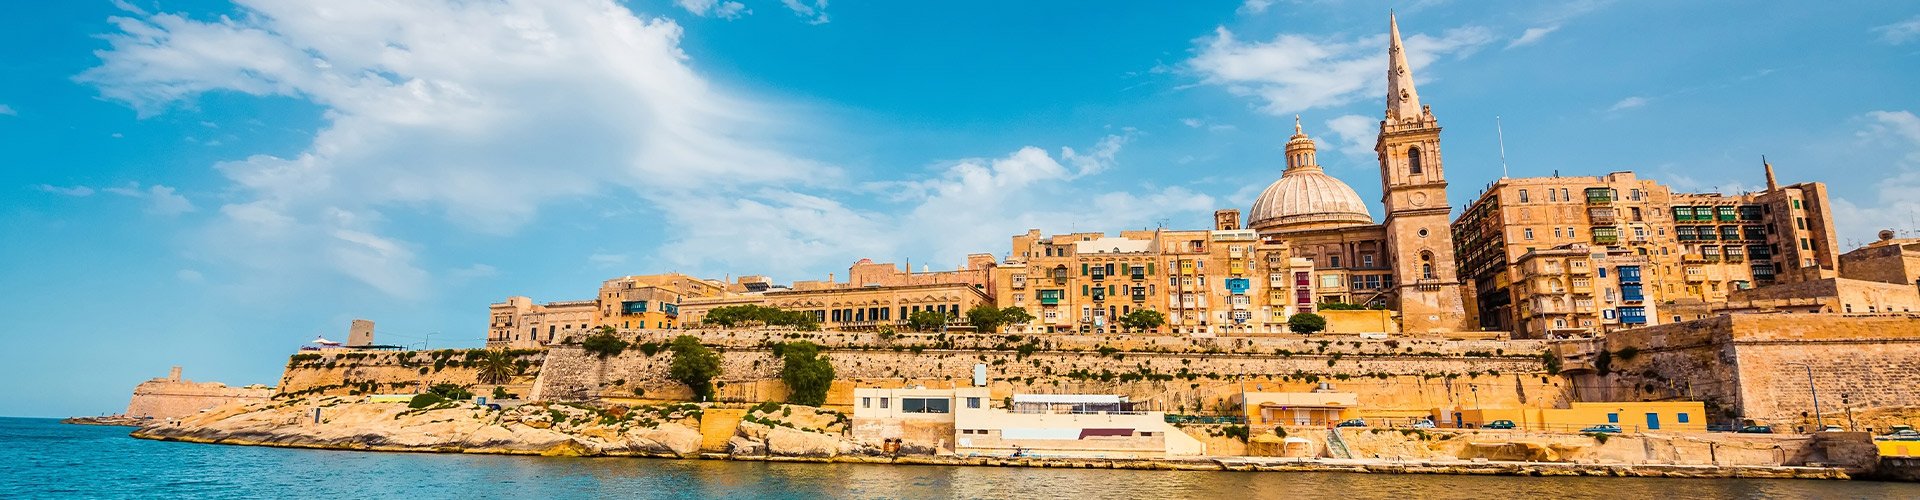 Highlights of Malta & Gozo